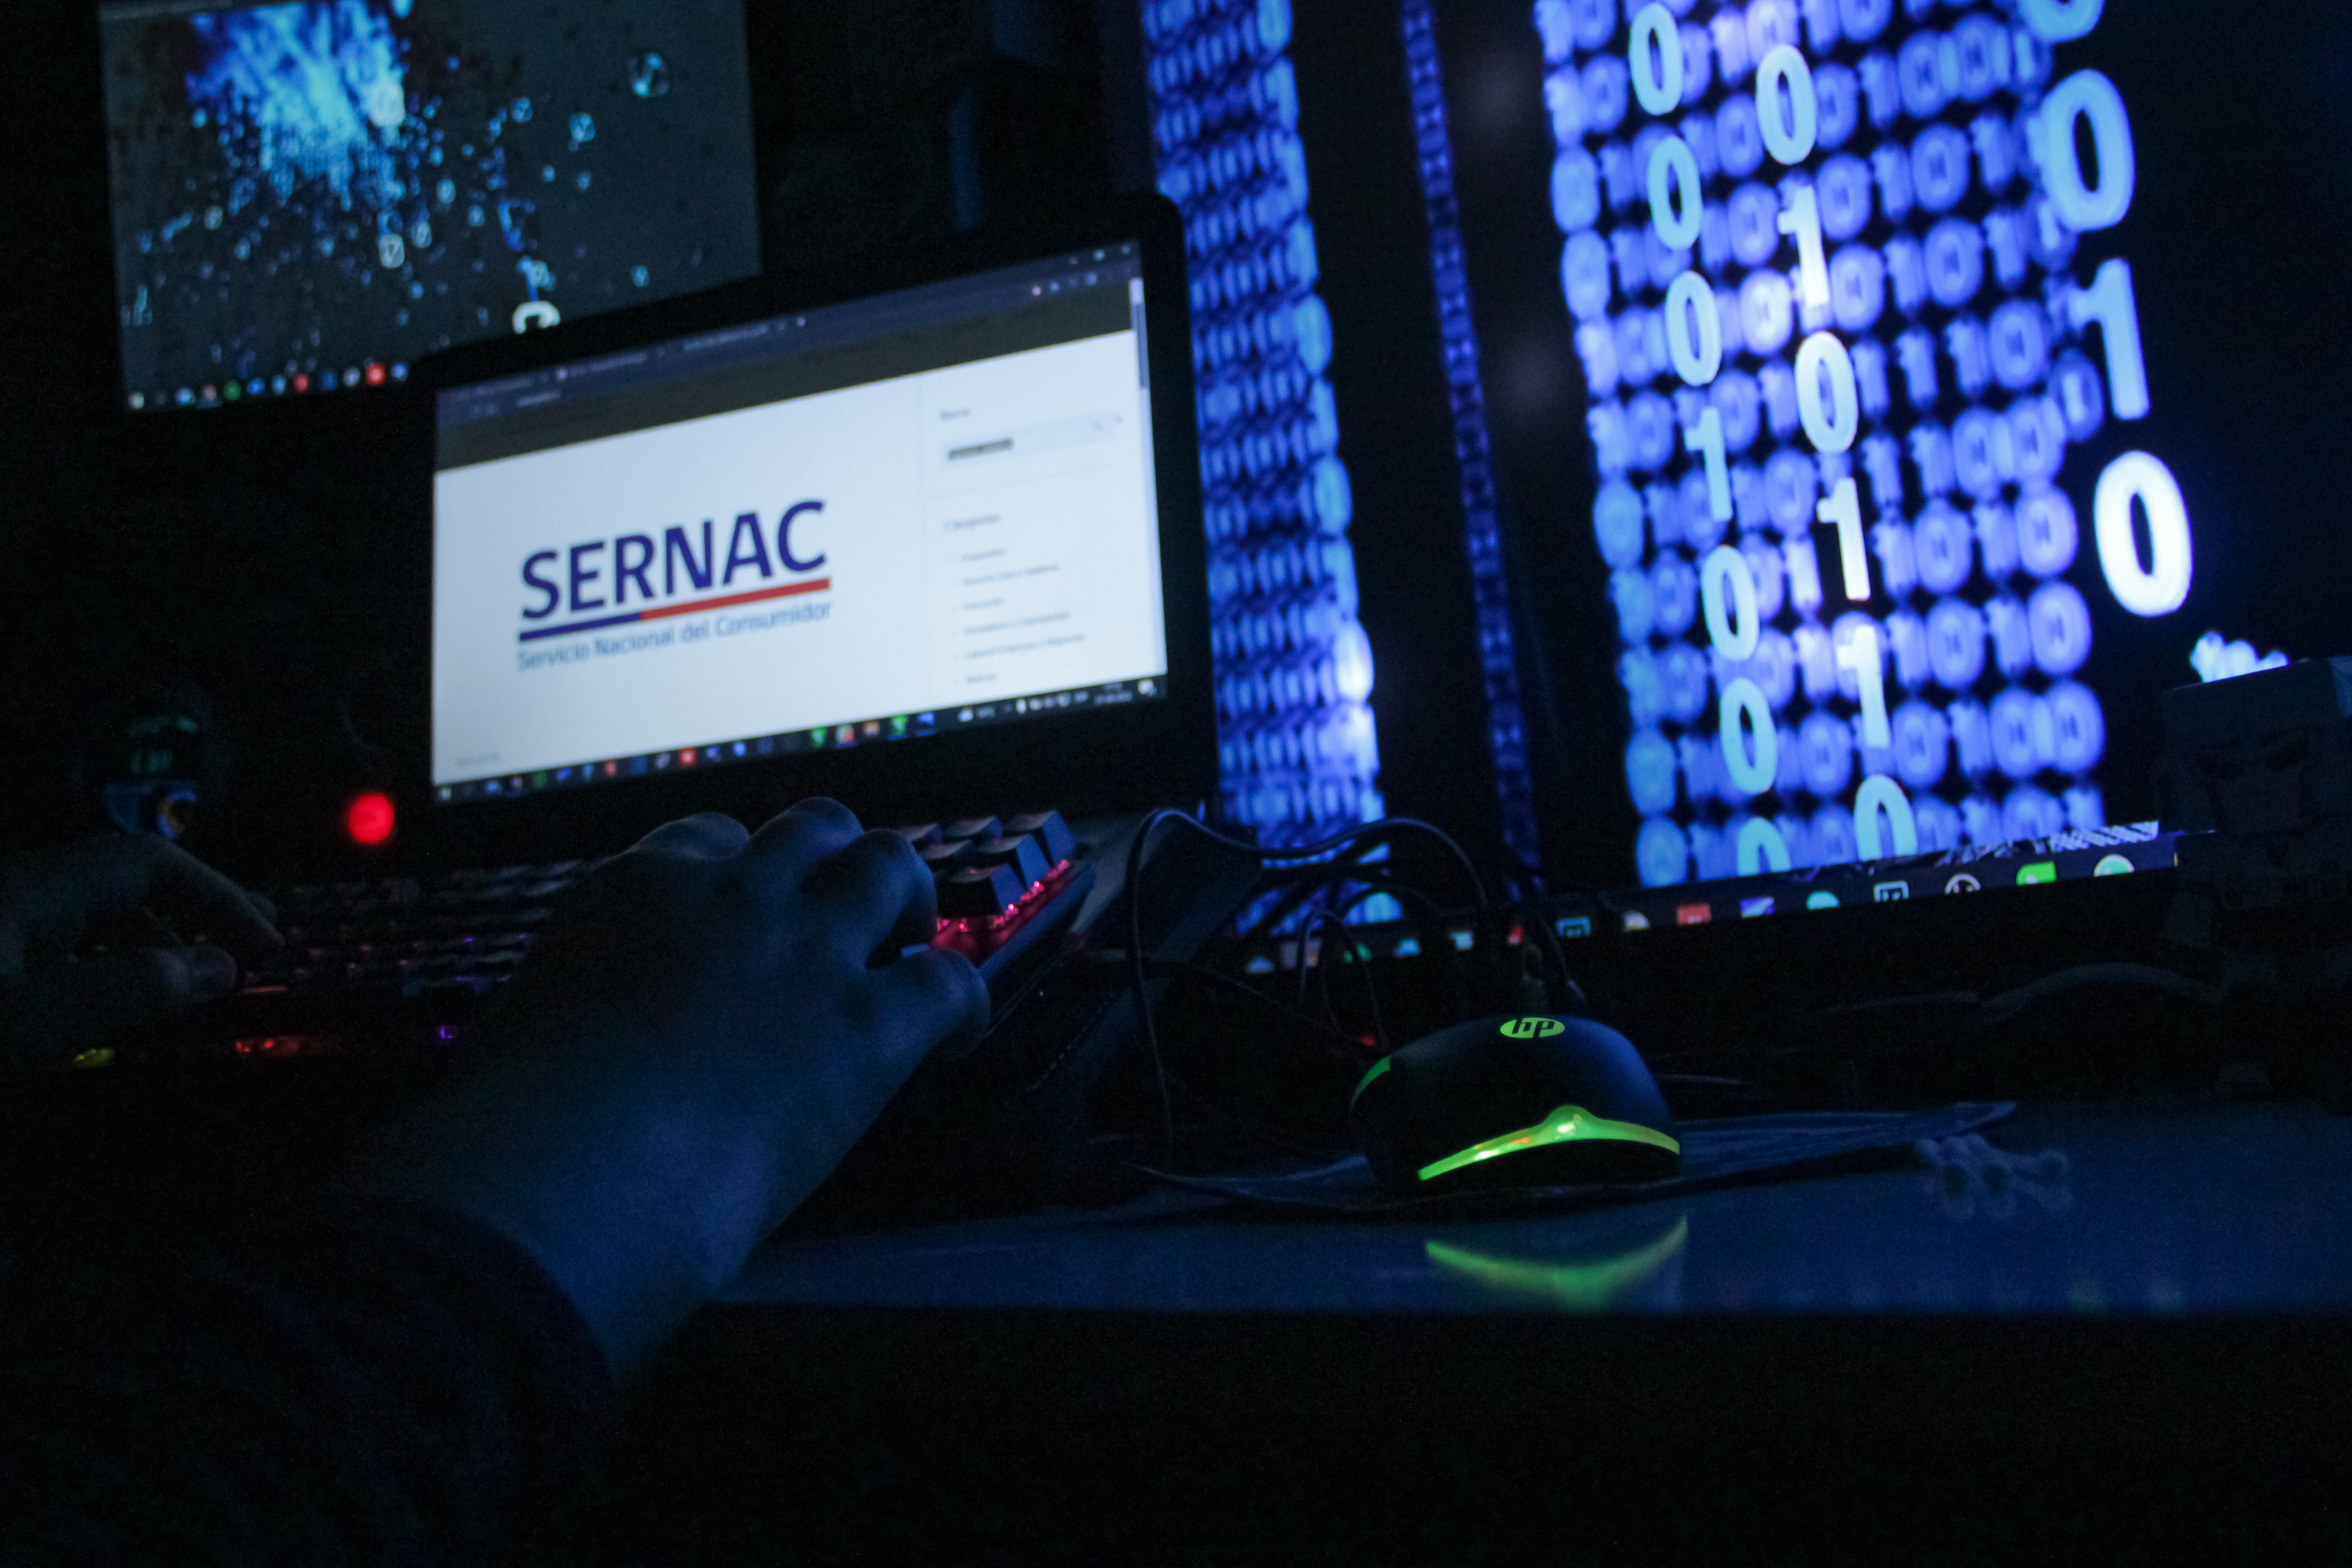 Captura de una imagen del Sernac enuna pantalla de computador.